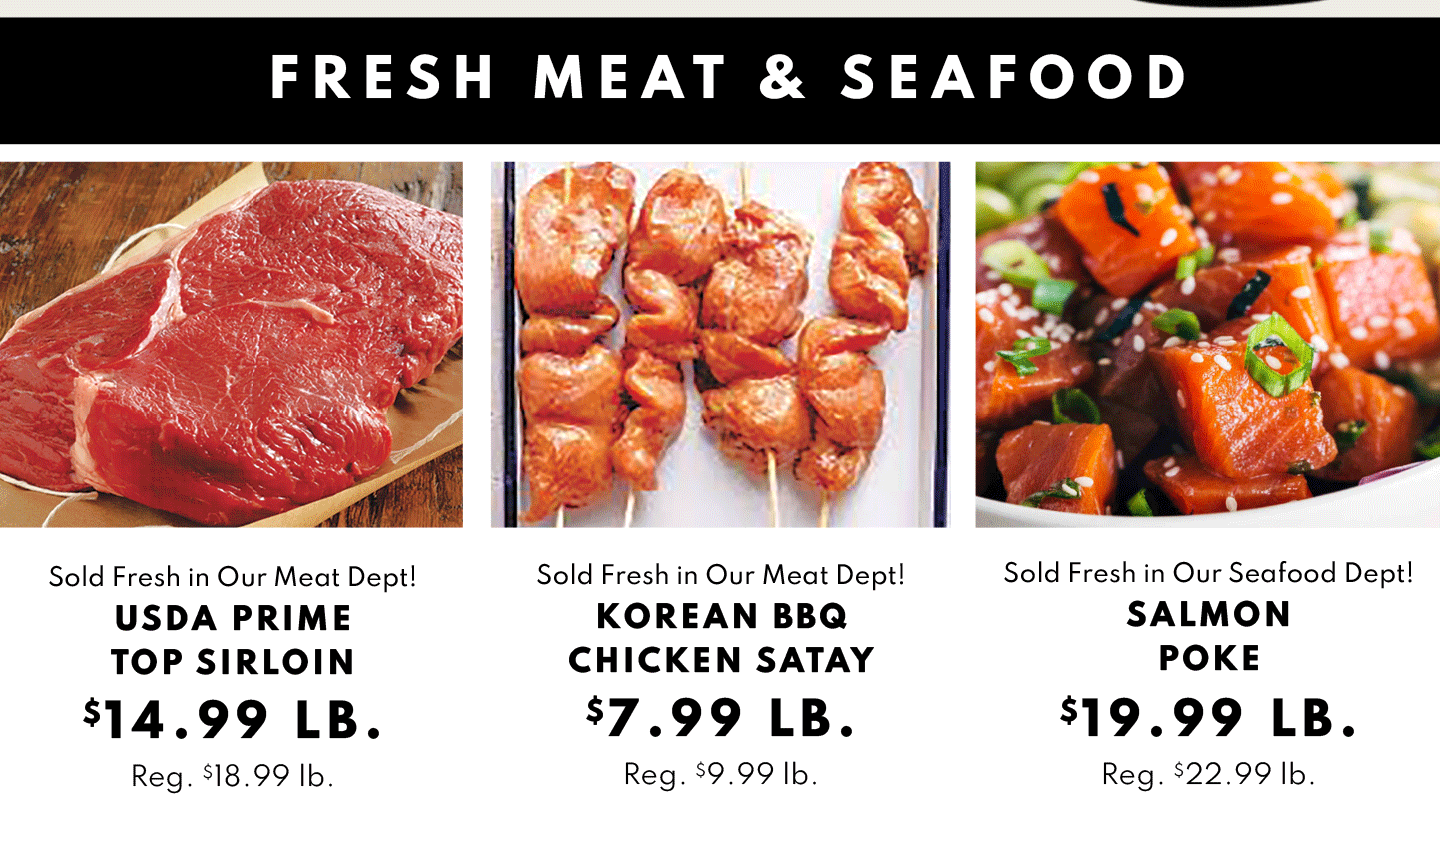 USDA Prime Top Sirloin $14.99 lb, Korean BBQ Chicken Satay $7.99 lb and Salmon Poke $19.99 lb